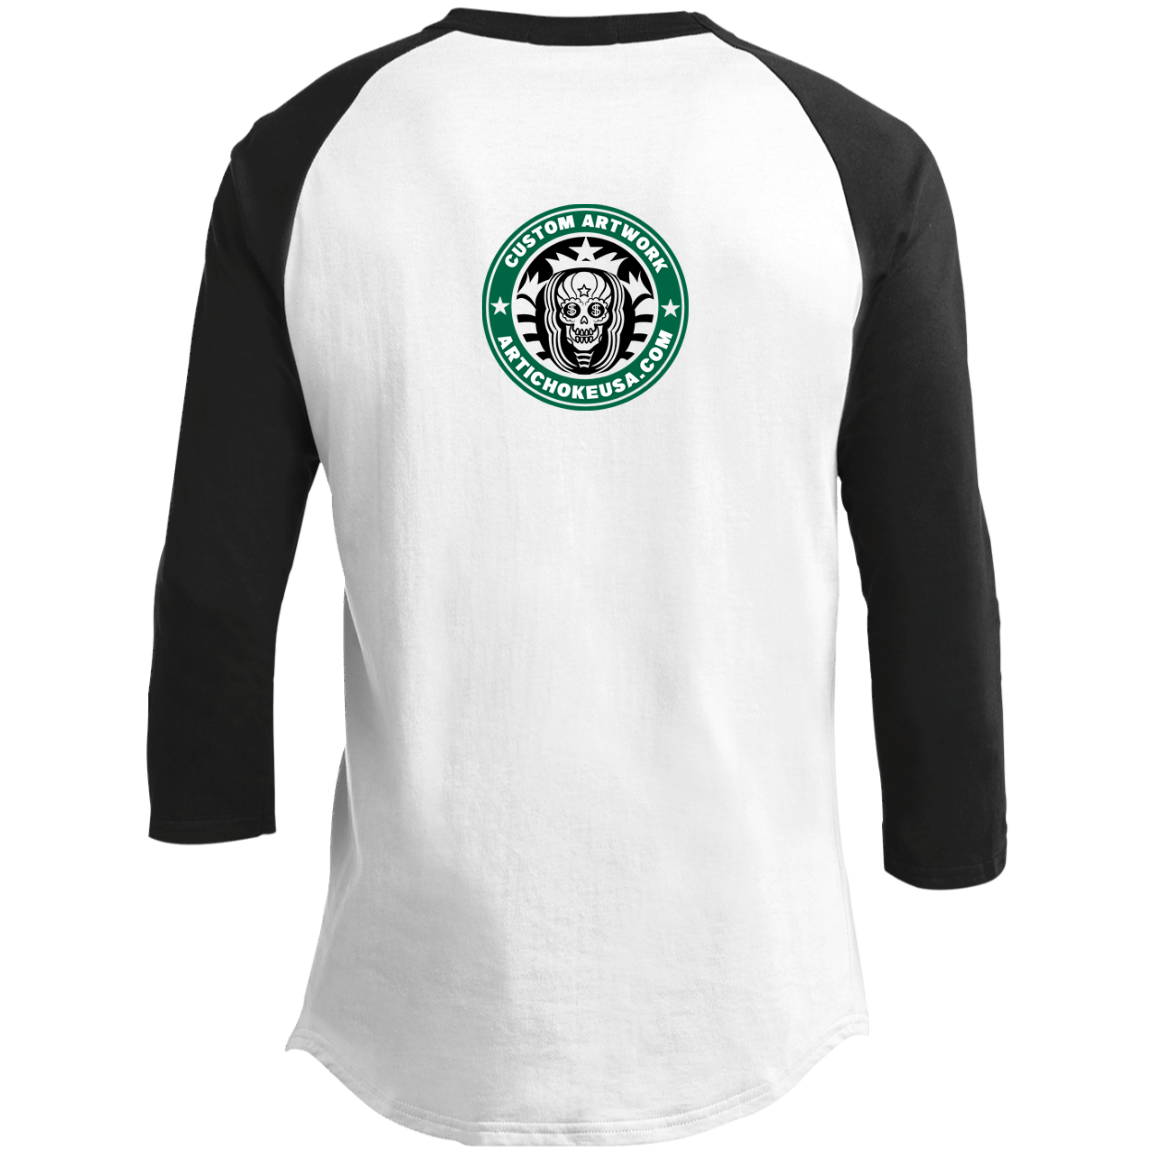 ArtichokeUSA Custom Design. Money Can't Buy Happiness But It Can Buy You Coffee. Youth 3/4 Raglan Sleeve Shirt